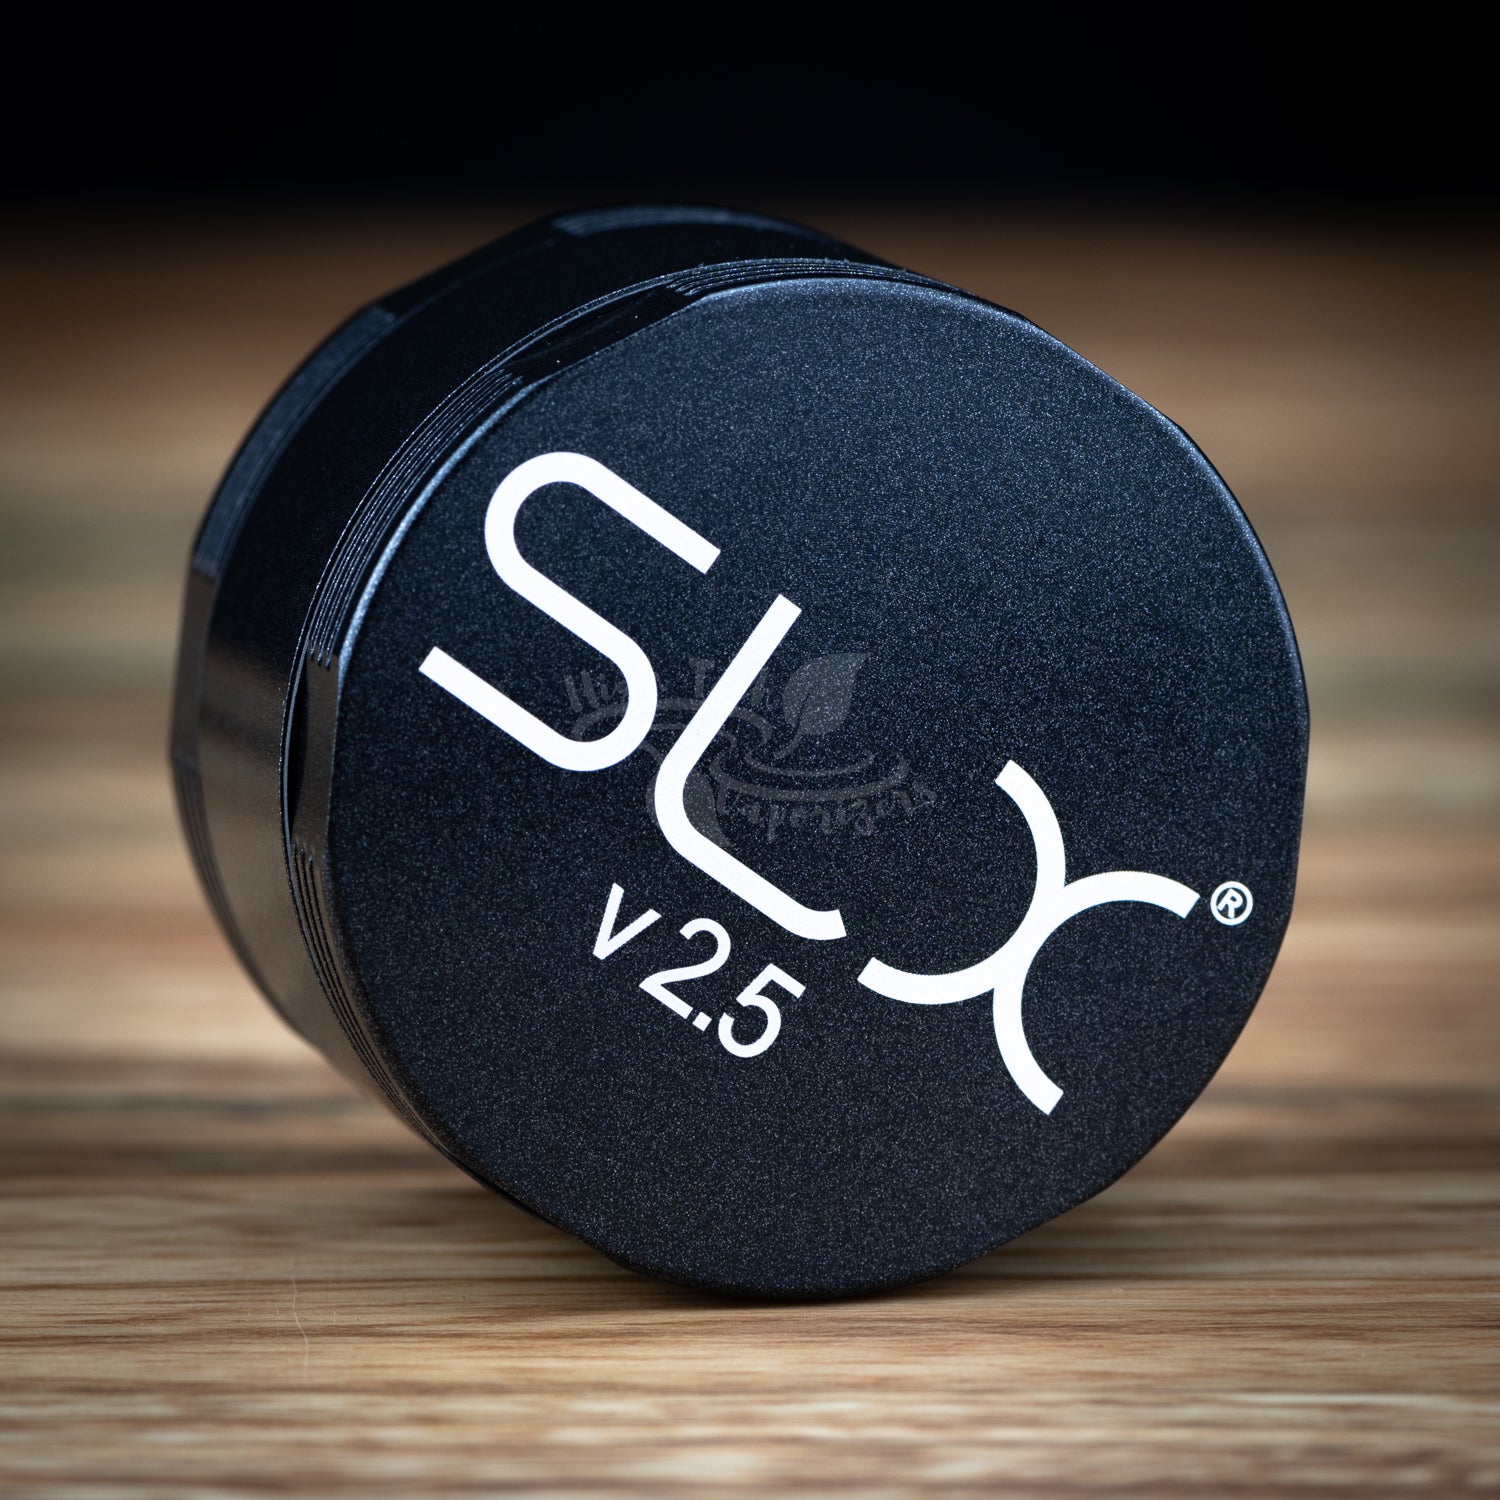 SLX: Non-Stick Technology